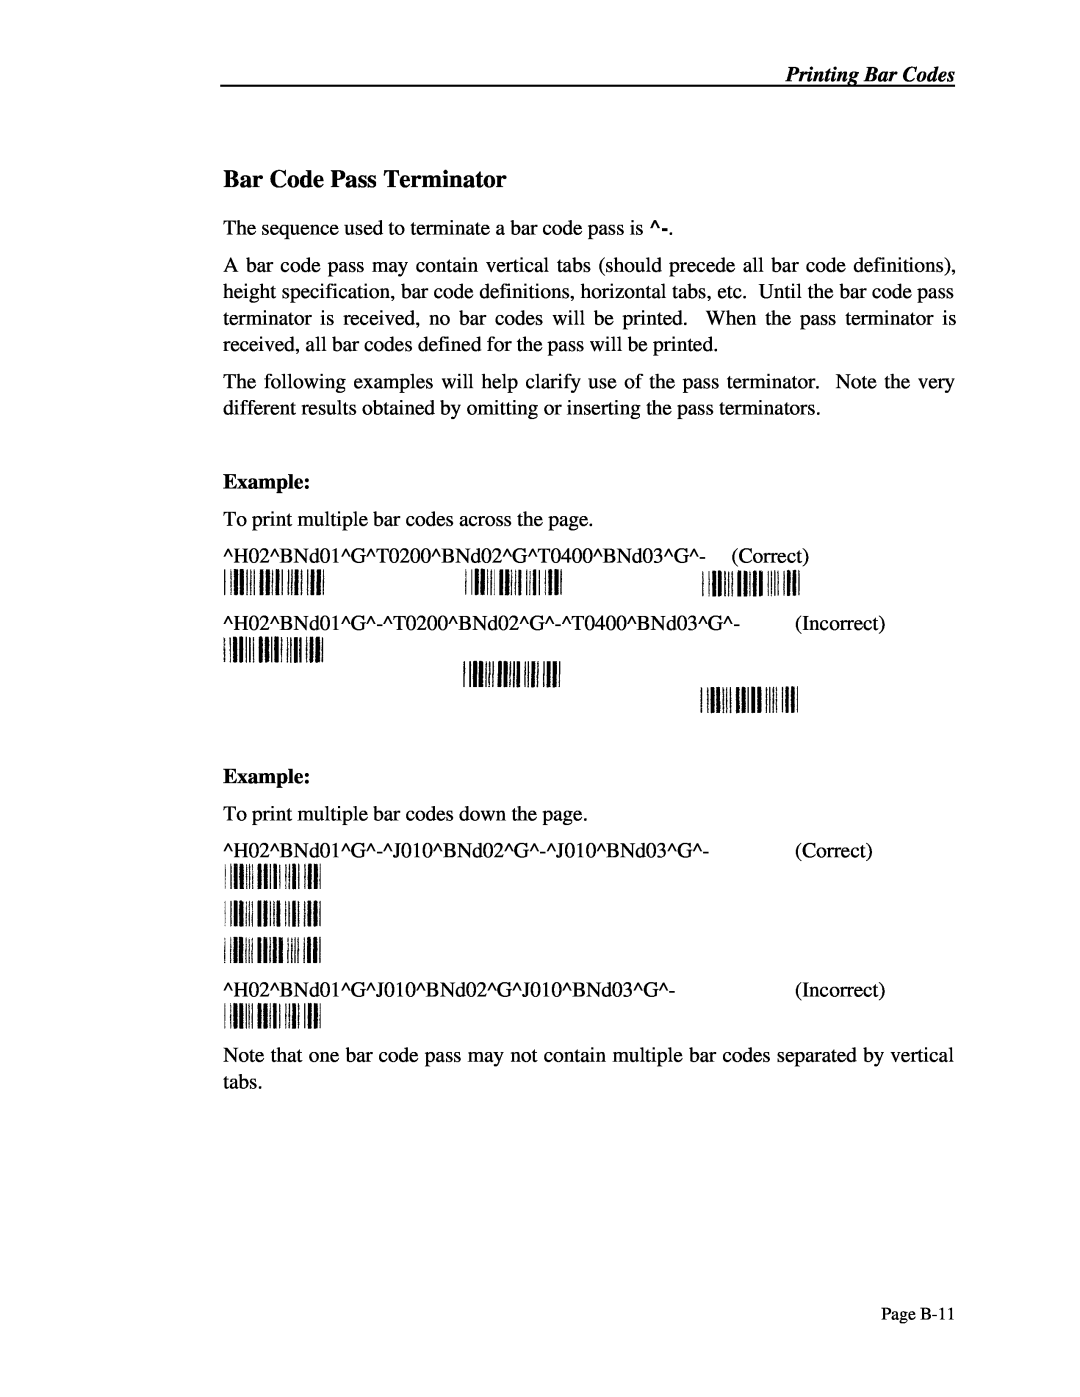 Printek 4300, 4503, 4500 manual Bar Code Pass Terminator 